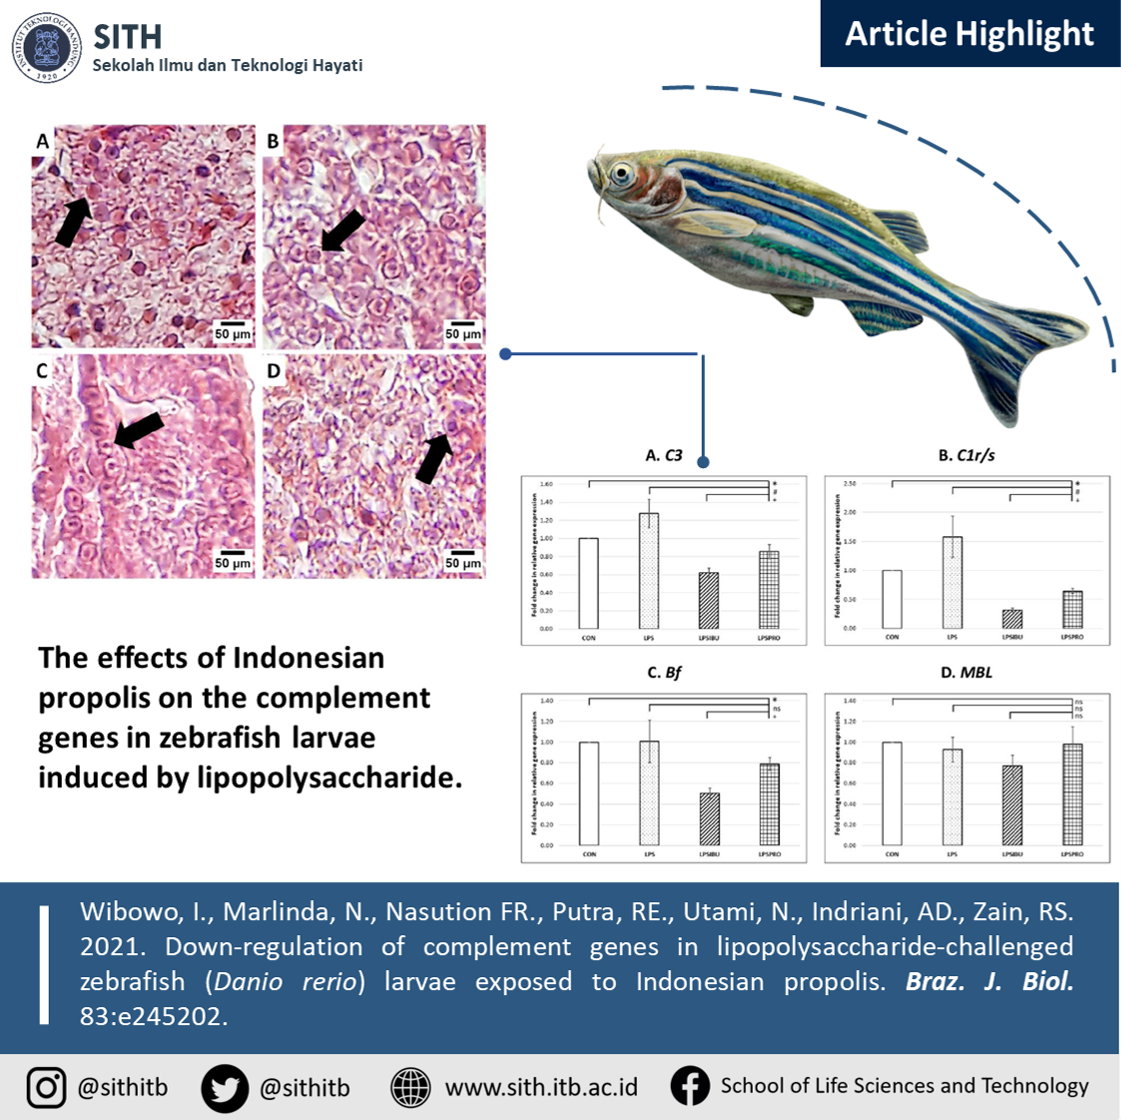 Down-regulation of complement genes in lipopolysaccharide-challenged zebrafish (Danio rerio) larvae exposed to Indonesian propolis